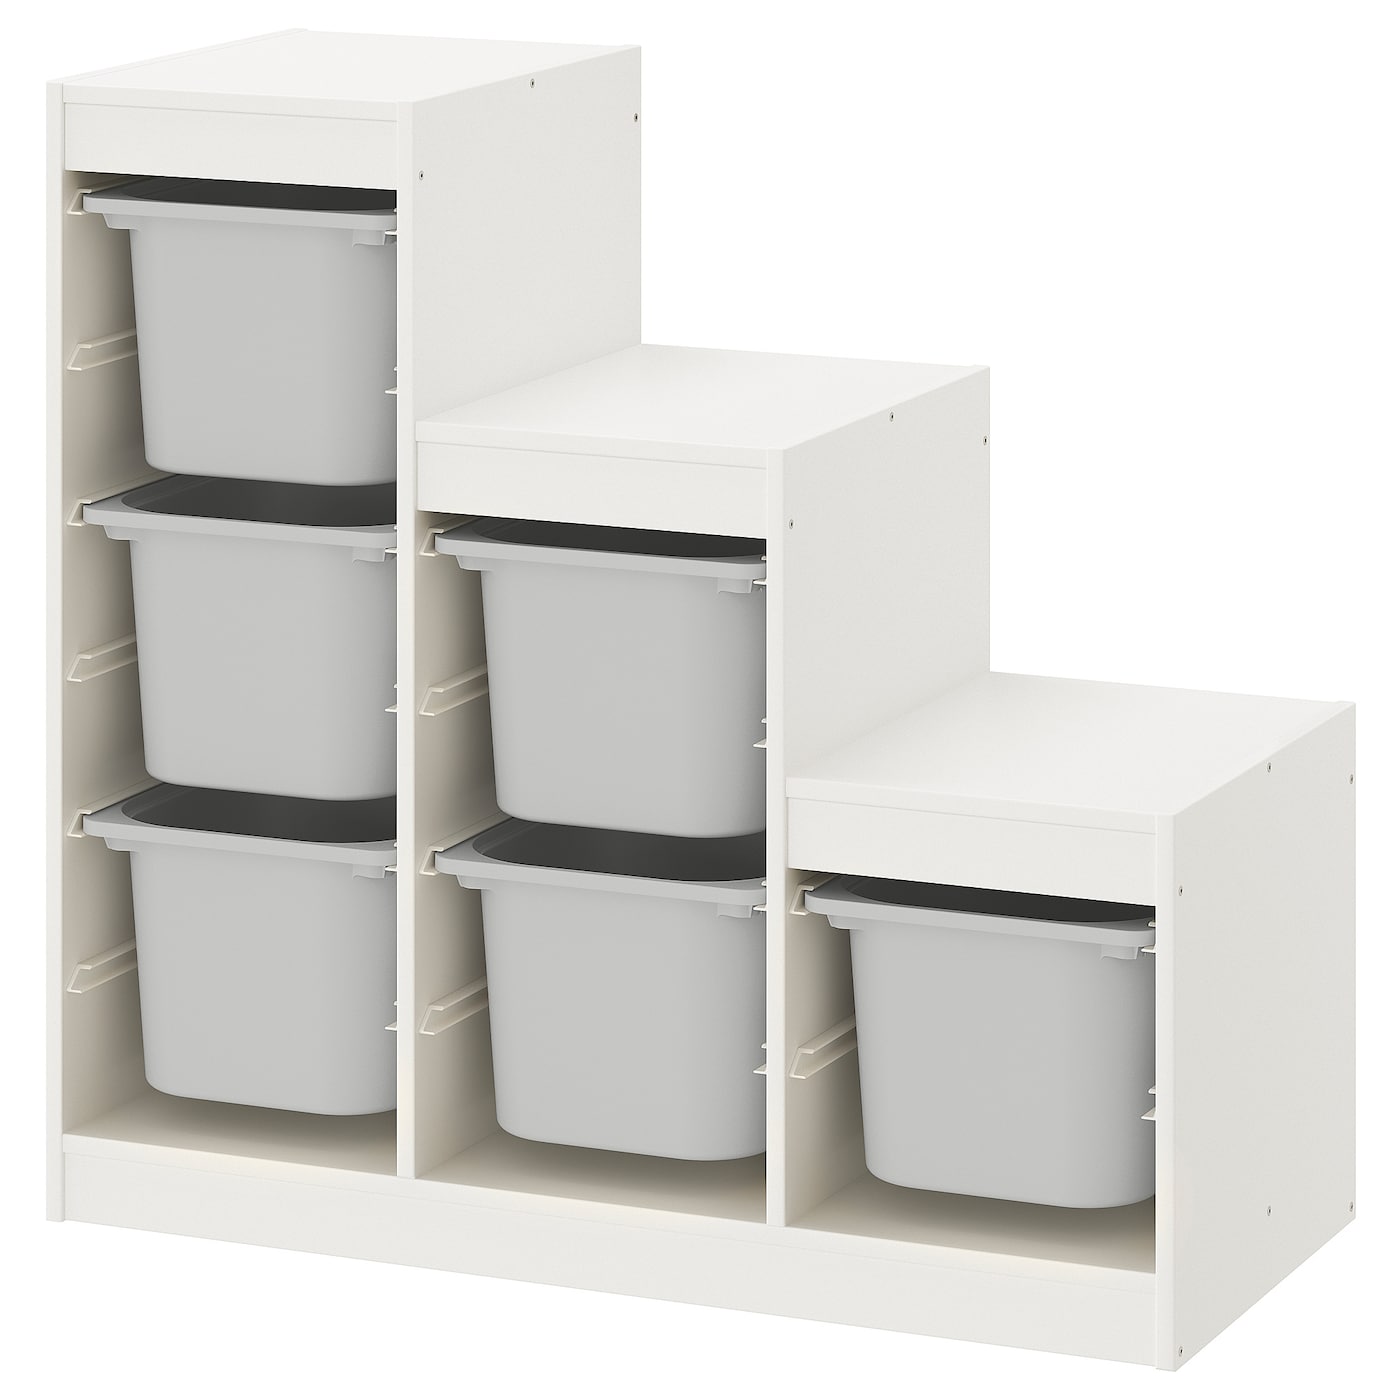 Стеллаж - IKEA TROFAST, 99х44х94 см, белый/серый, ТРУФАСТ ИКЕА